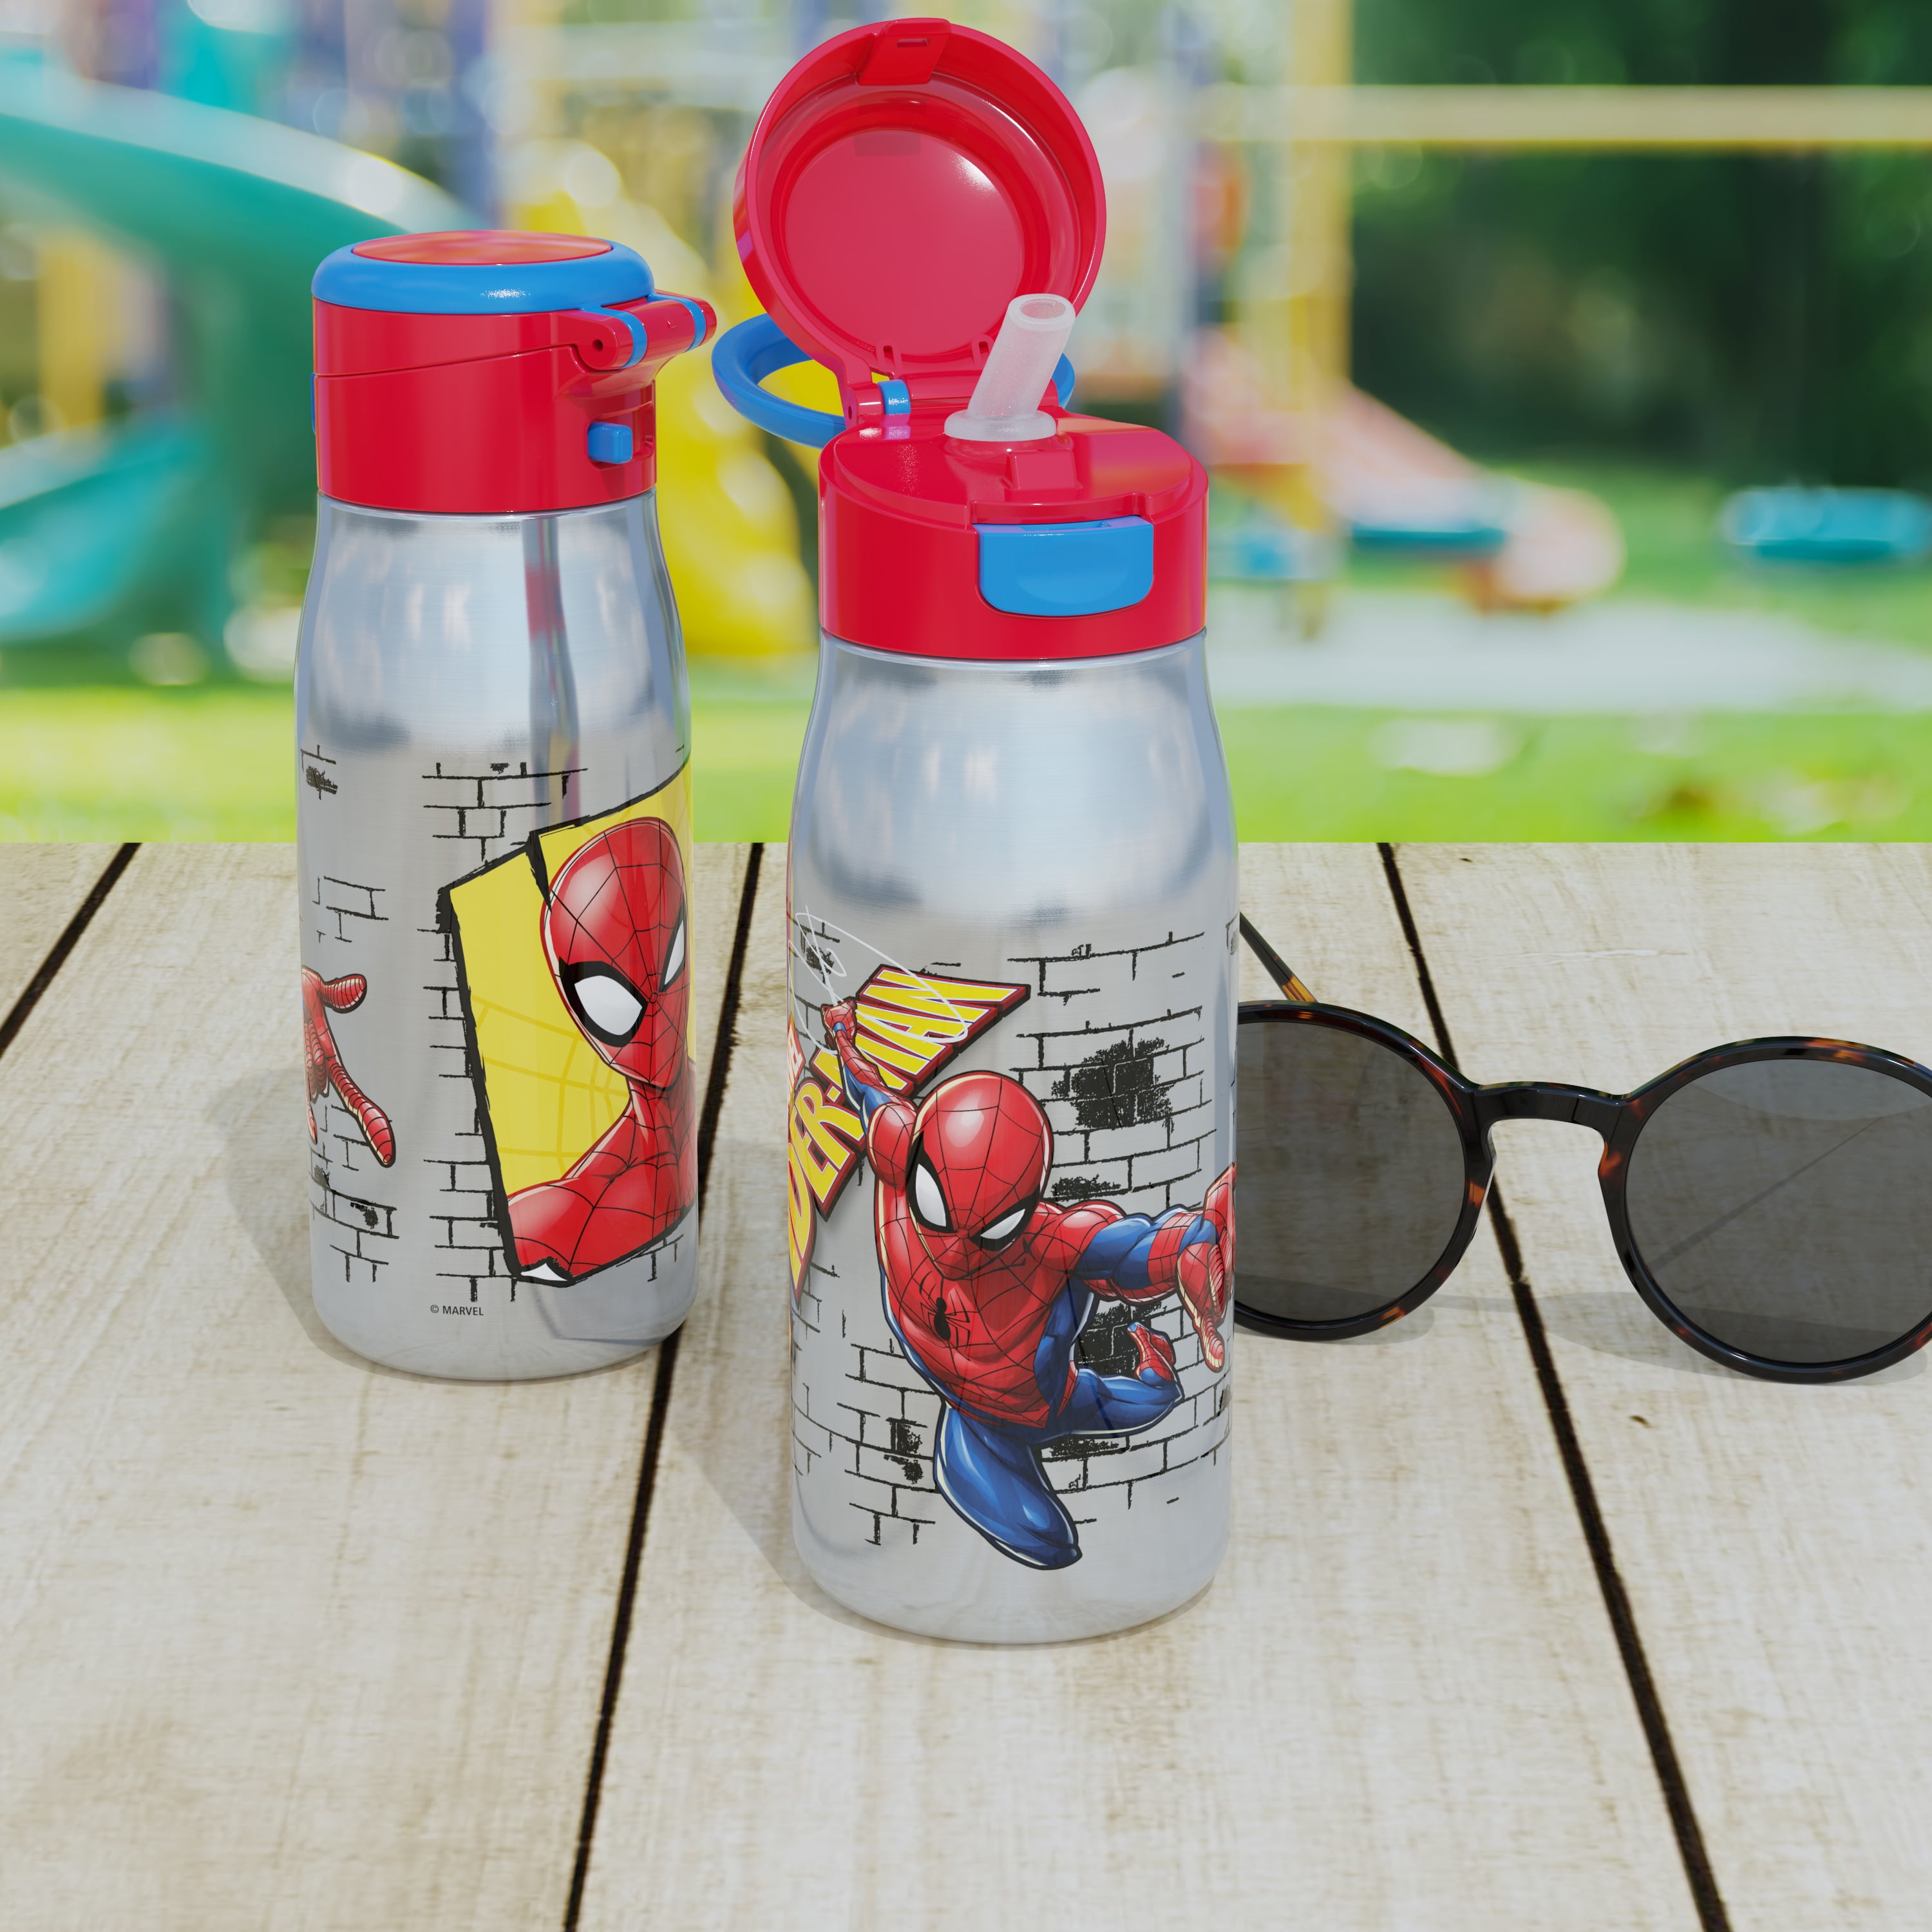 Spiderman Dark Aluminum Water Bottle 500 ml - Javoli Disney Online Sto